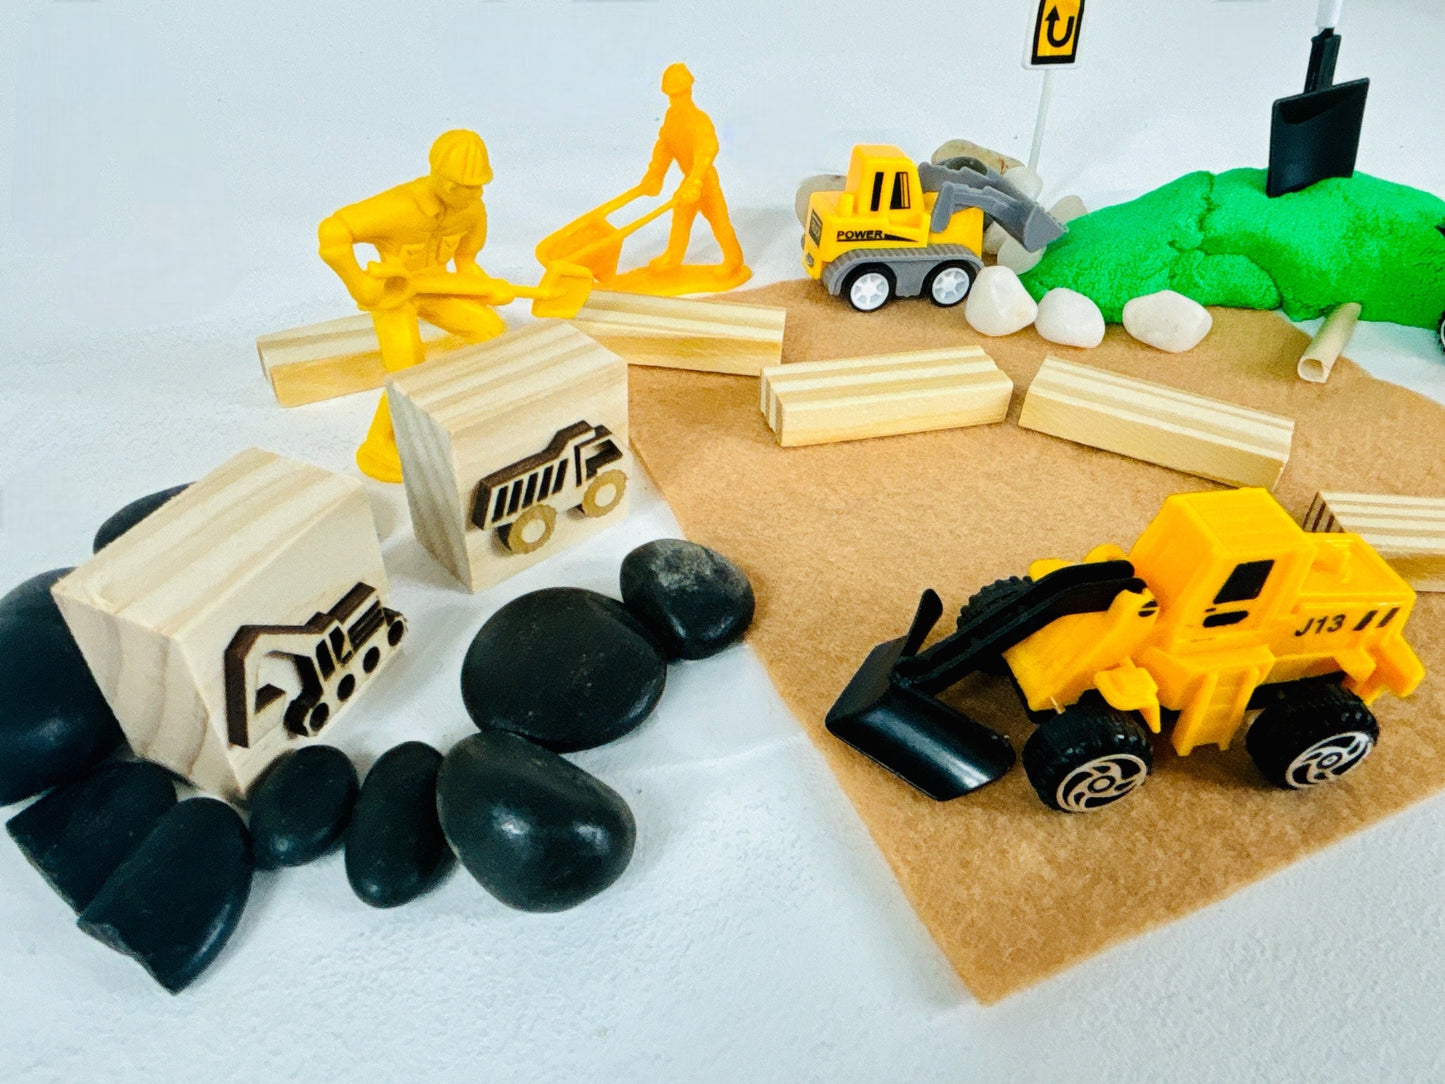 Construction Sensory Kit, Builder Play Dough Busy Box, Fine Motor Skills Development Activities Bin, Gift for Boys, Kinetic Sand Kit